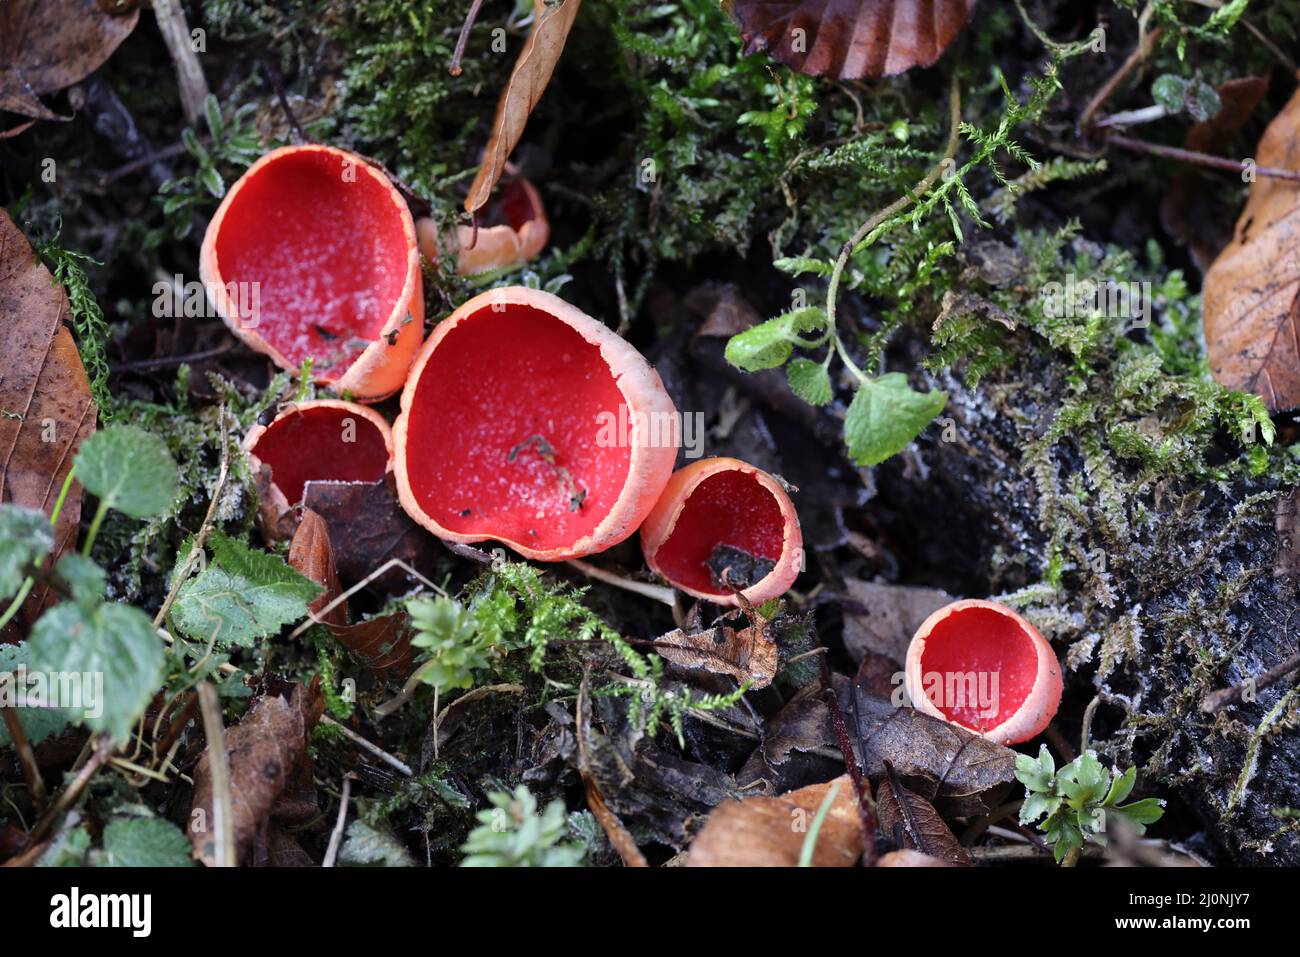 Scarlet elf cup, Sarcoscypha coccinea, ( Peziza coccinea ) growing abundantly in mossy woodland in winter Swabian Alb, Baden-Wuerttemberg, Germany, Eu Stock Photo